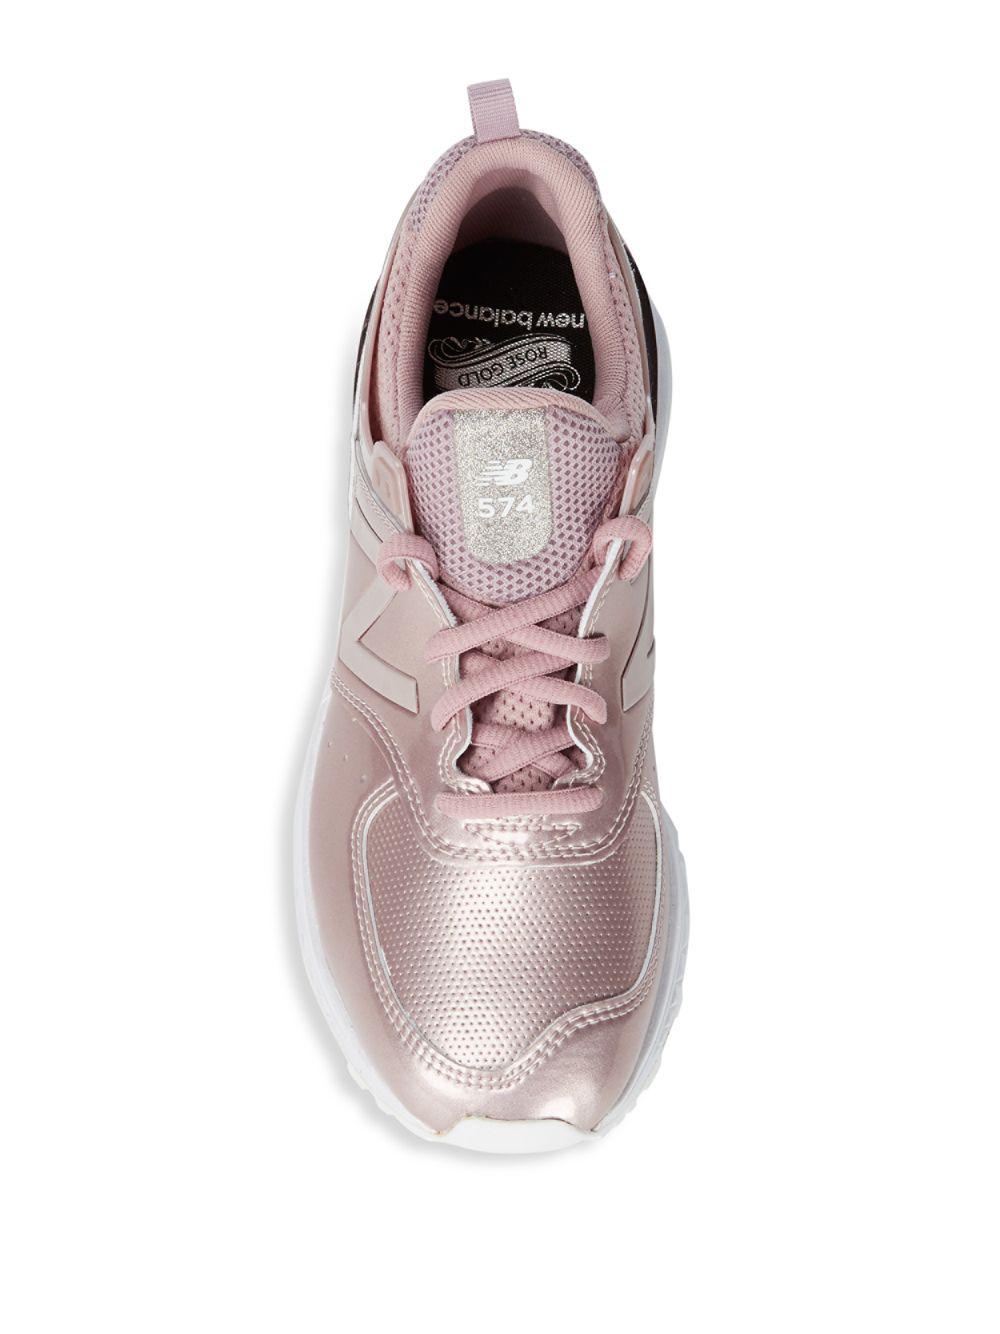 New Balance Metallic 574 Sneakers in Pink | Lyst